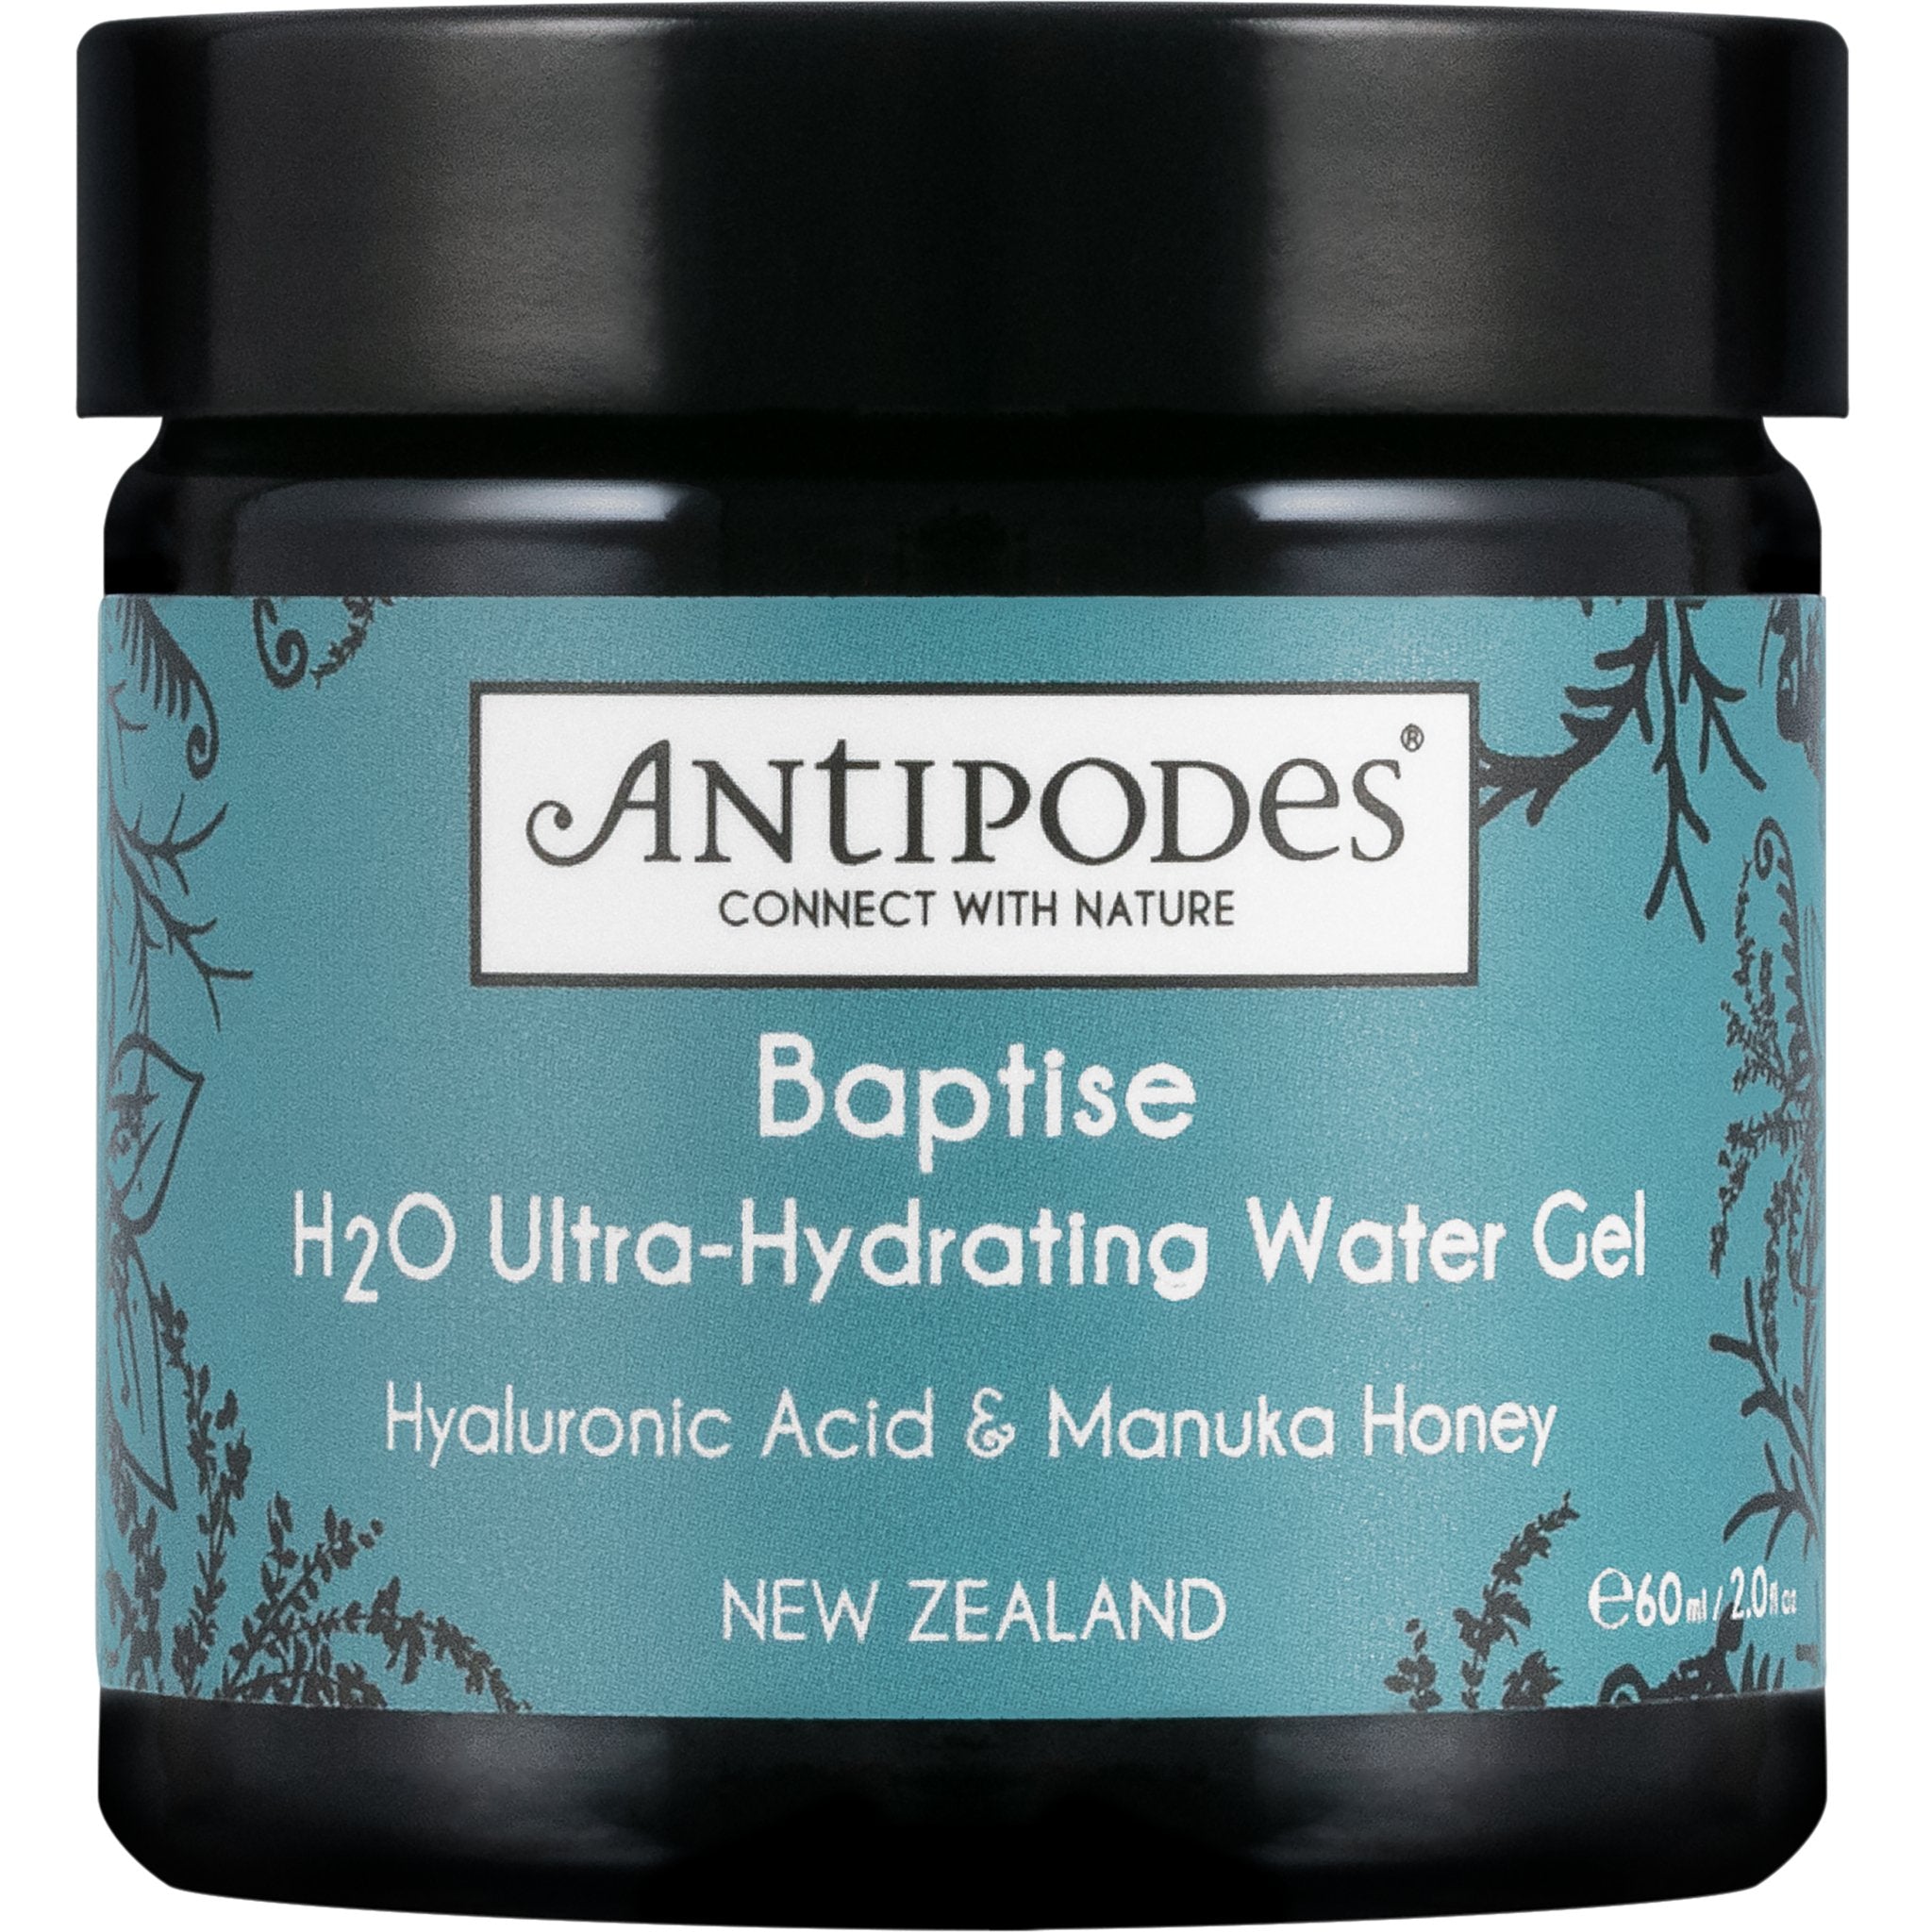 Baptise H2O Ultra-Hydrating Water Gel Moisturiser - mypure.co.uk